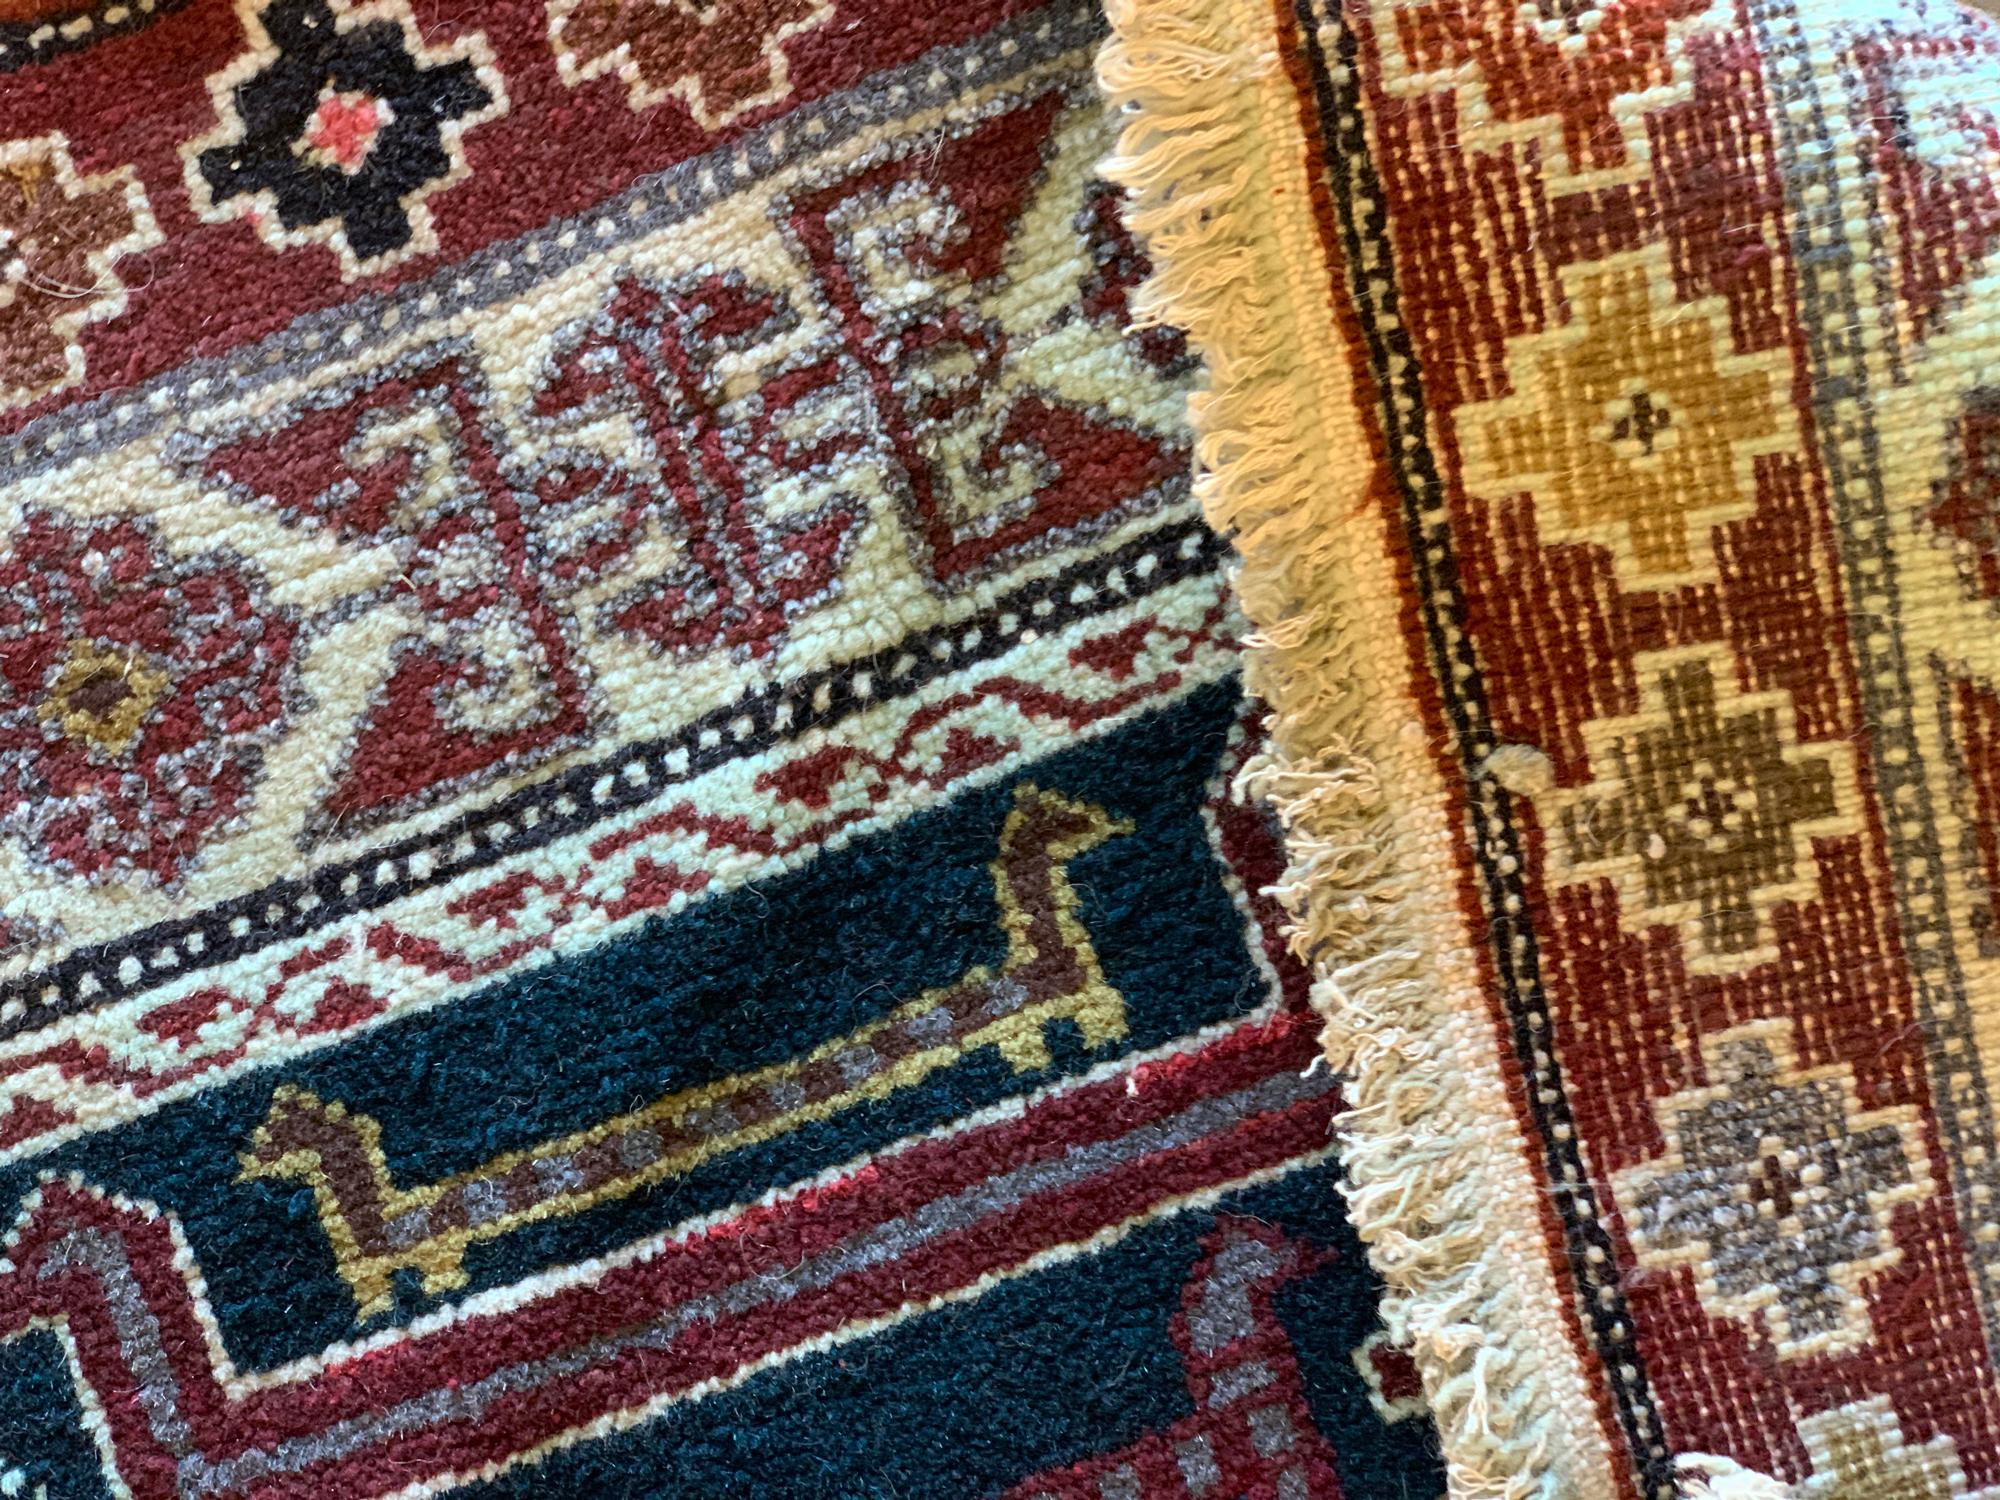 Late 19th Century Azerbaijan Rug Antique Wool Blue Red Carpet Handmade For Sale